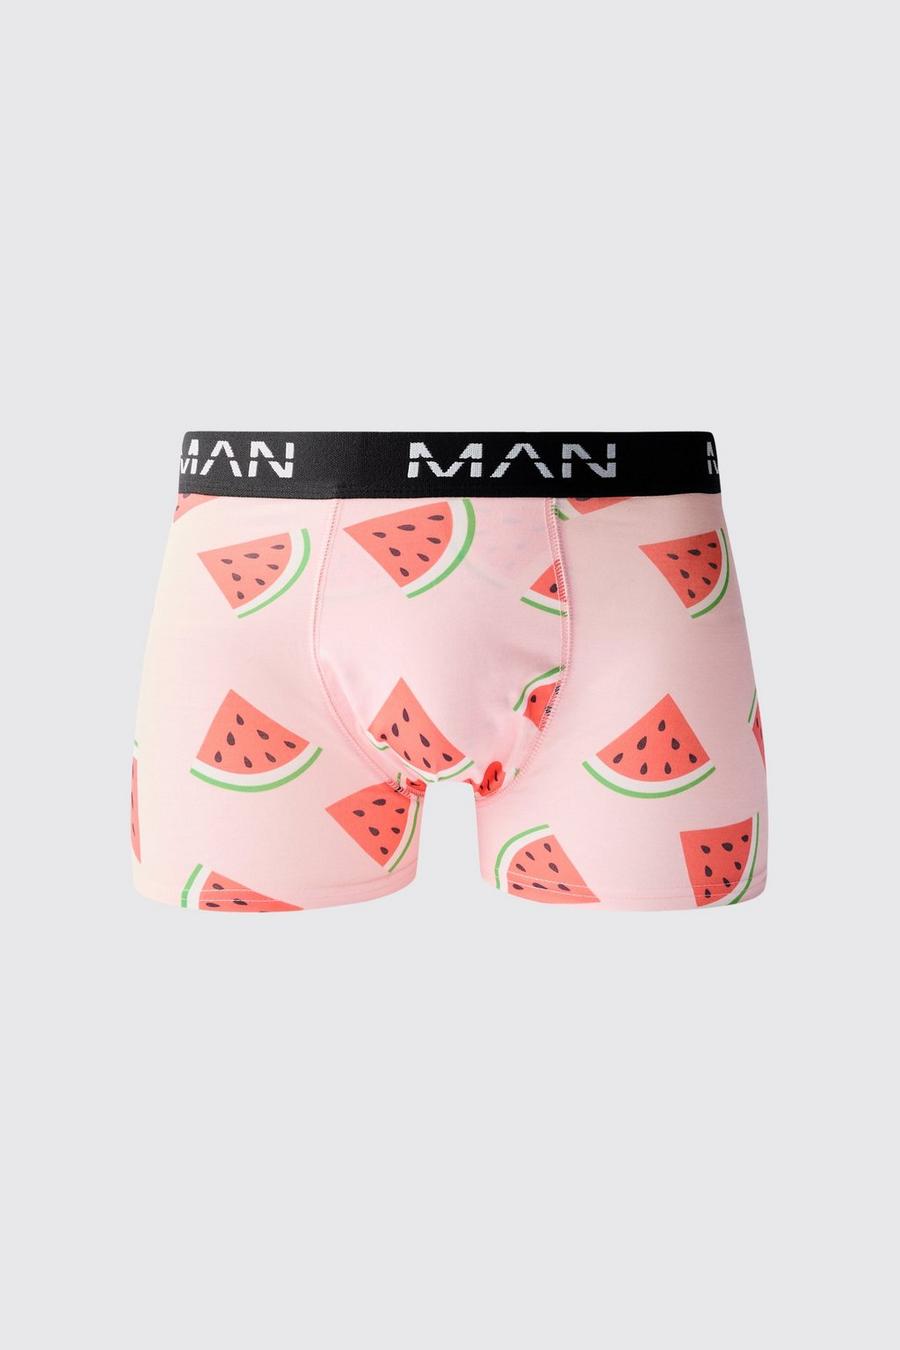 Multi Man Watermelon Slice Printed Boxers image number 1